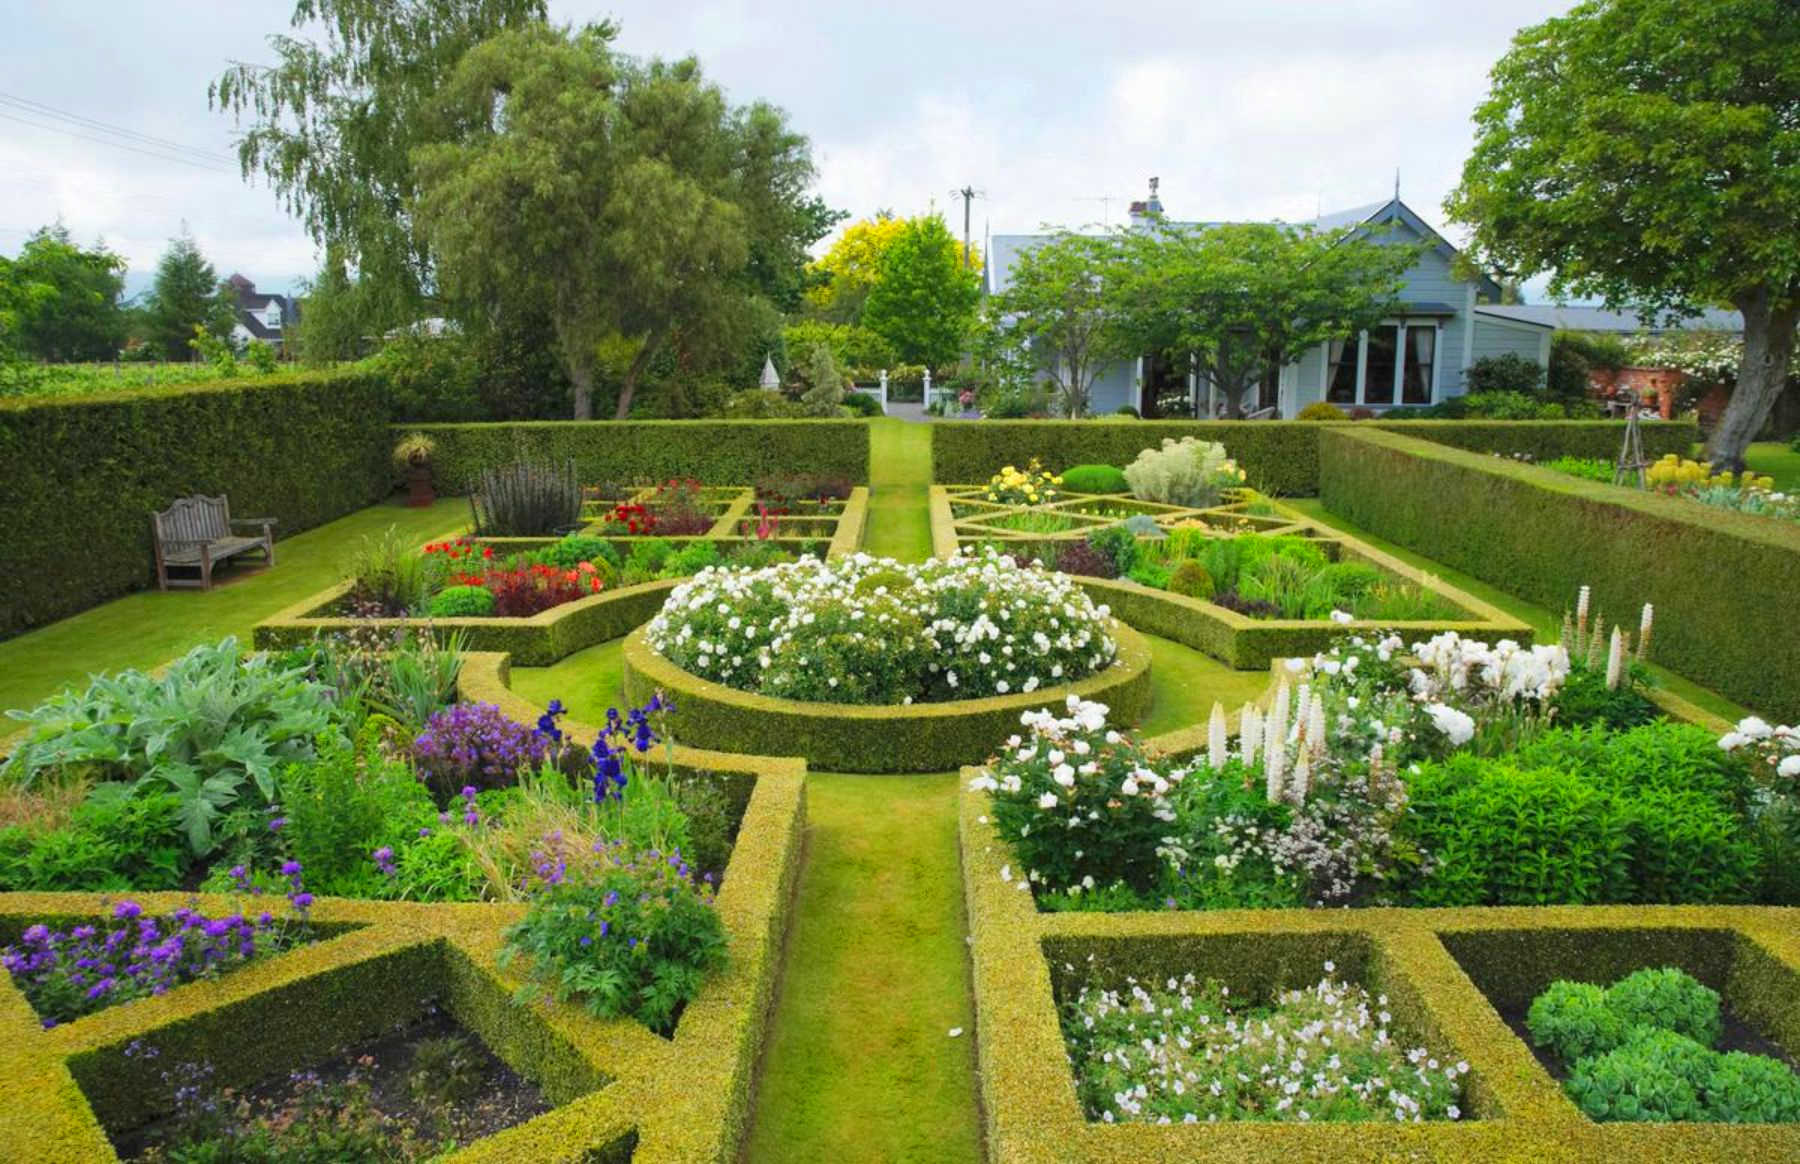 Upton Oaks Garden and Accommodation, Marlborough, New Zealand @MarlboroughNZ